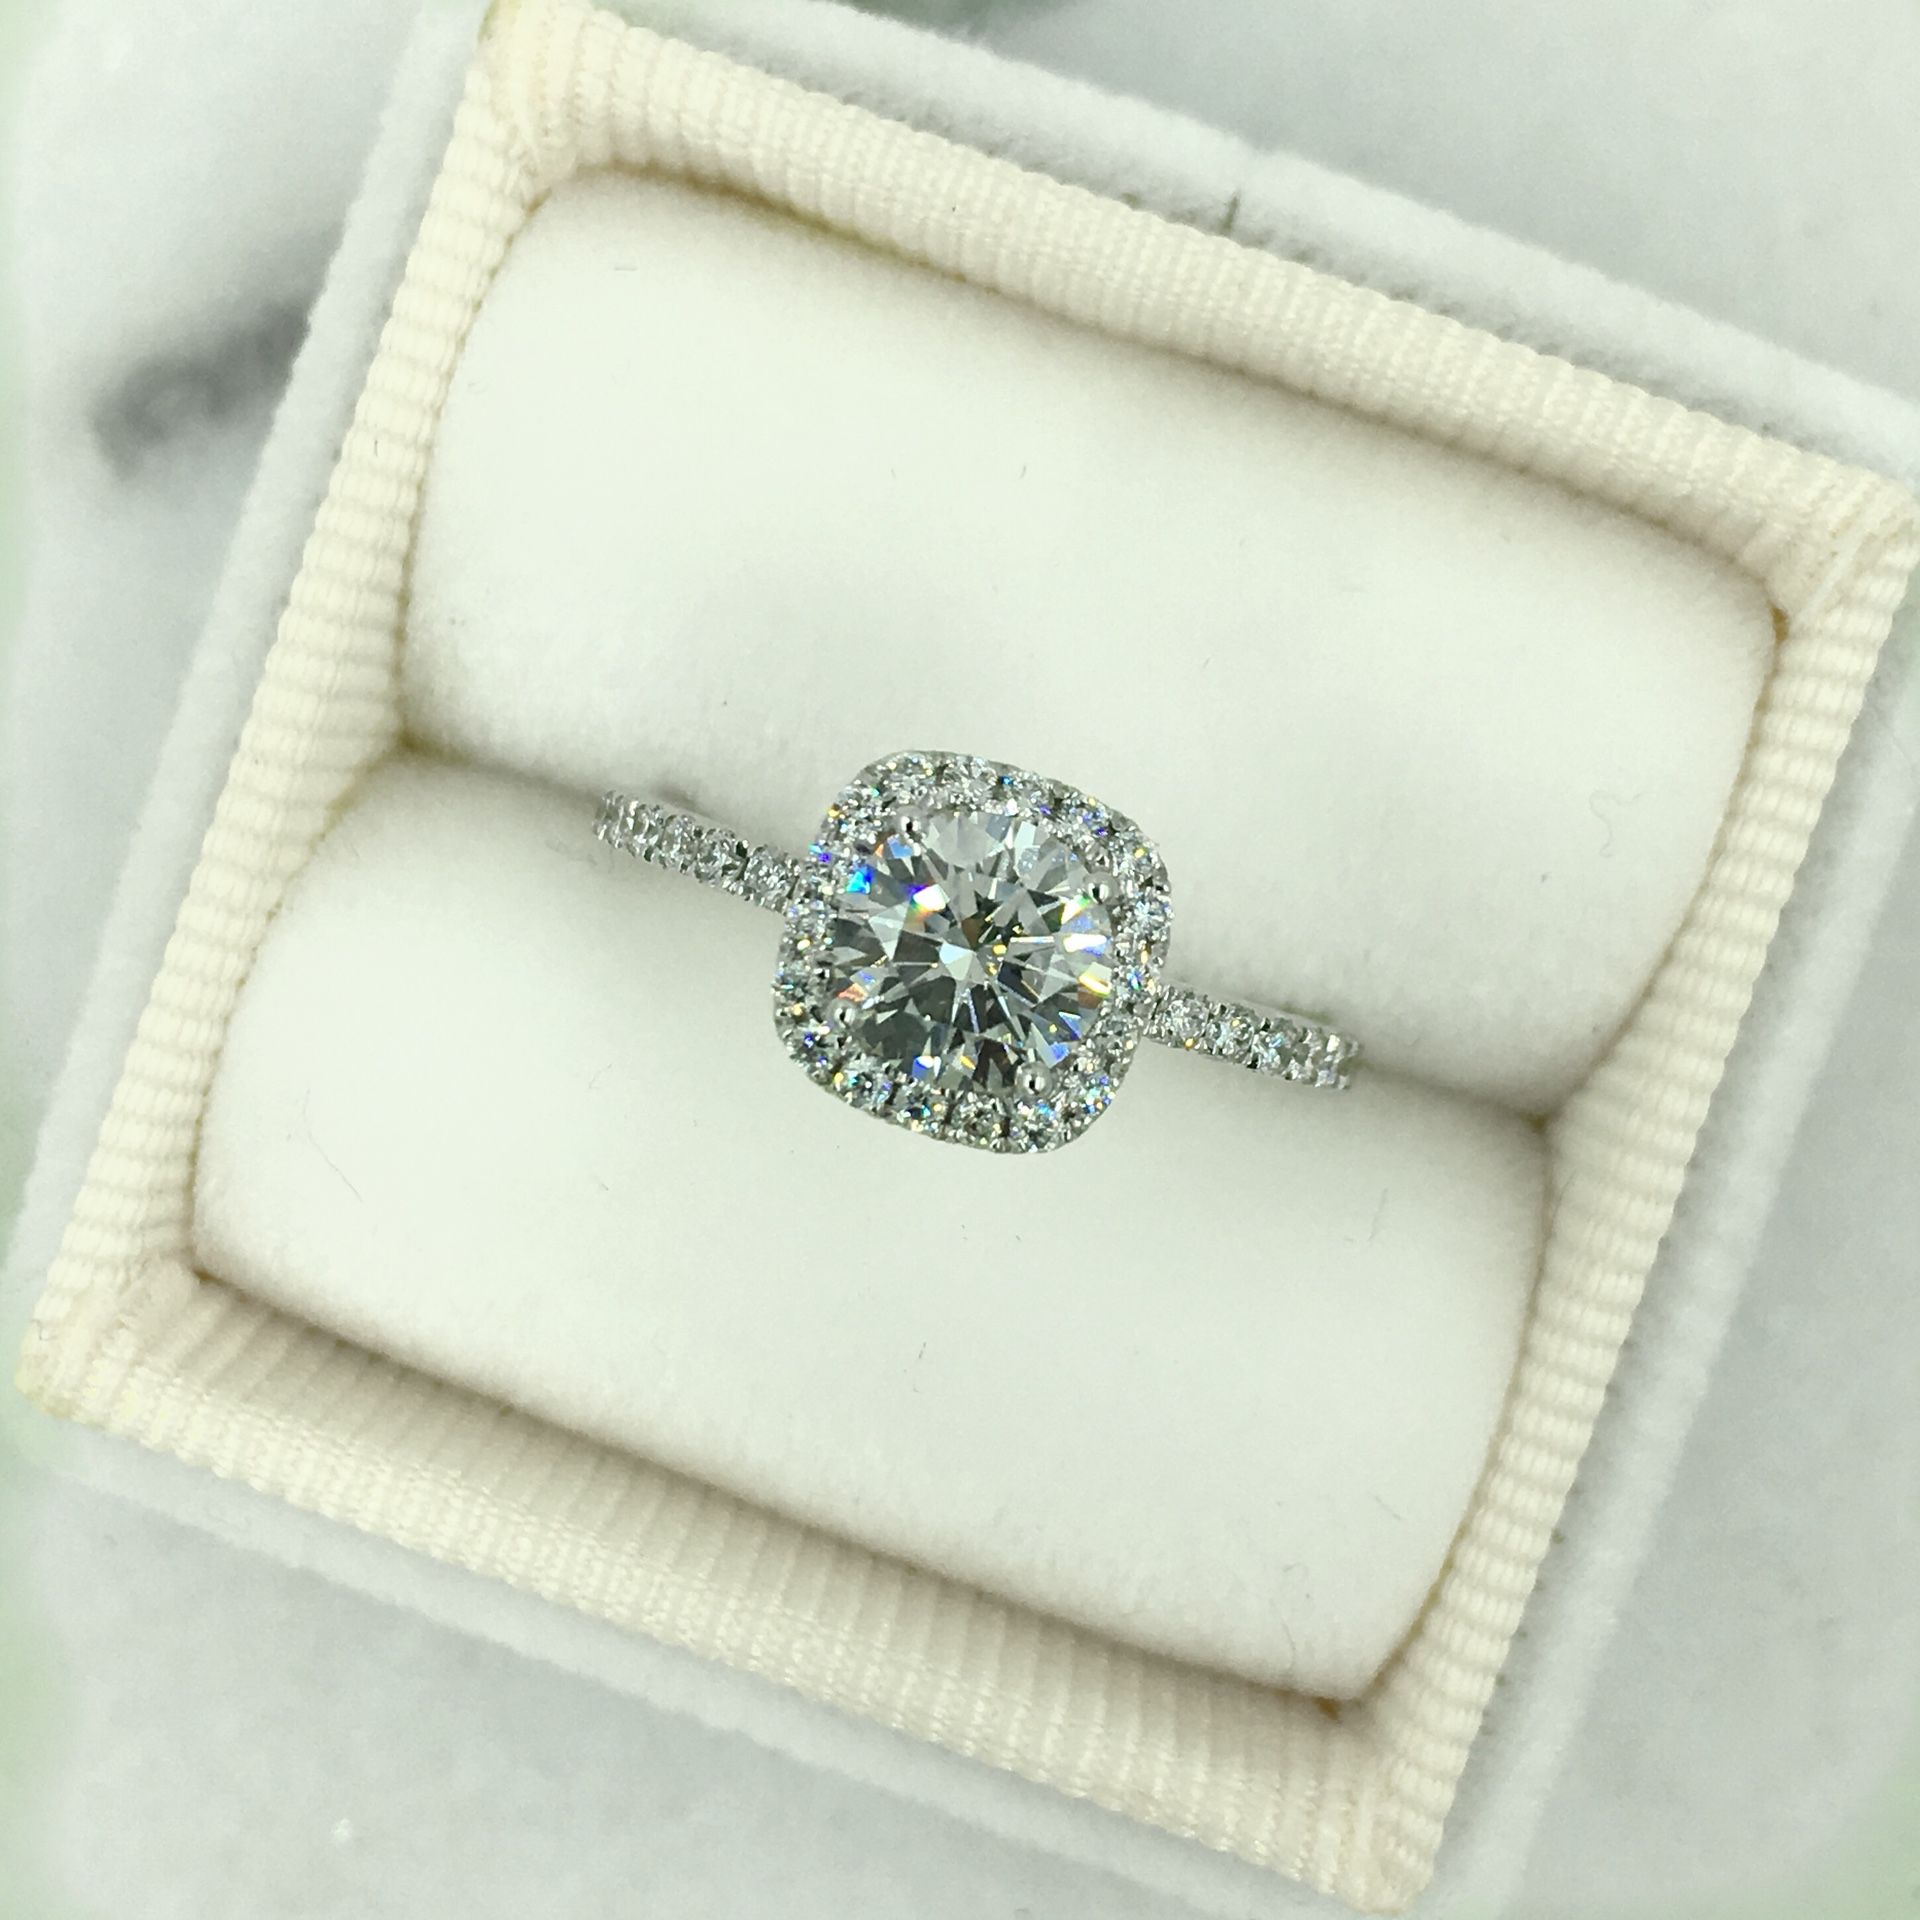 1.21 carat diamond engagement ring. I VS2 Never worn